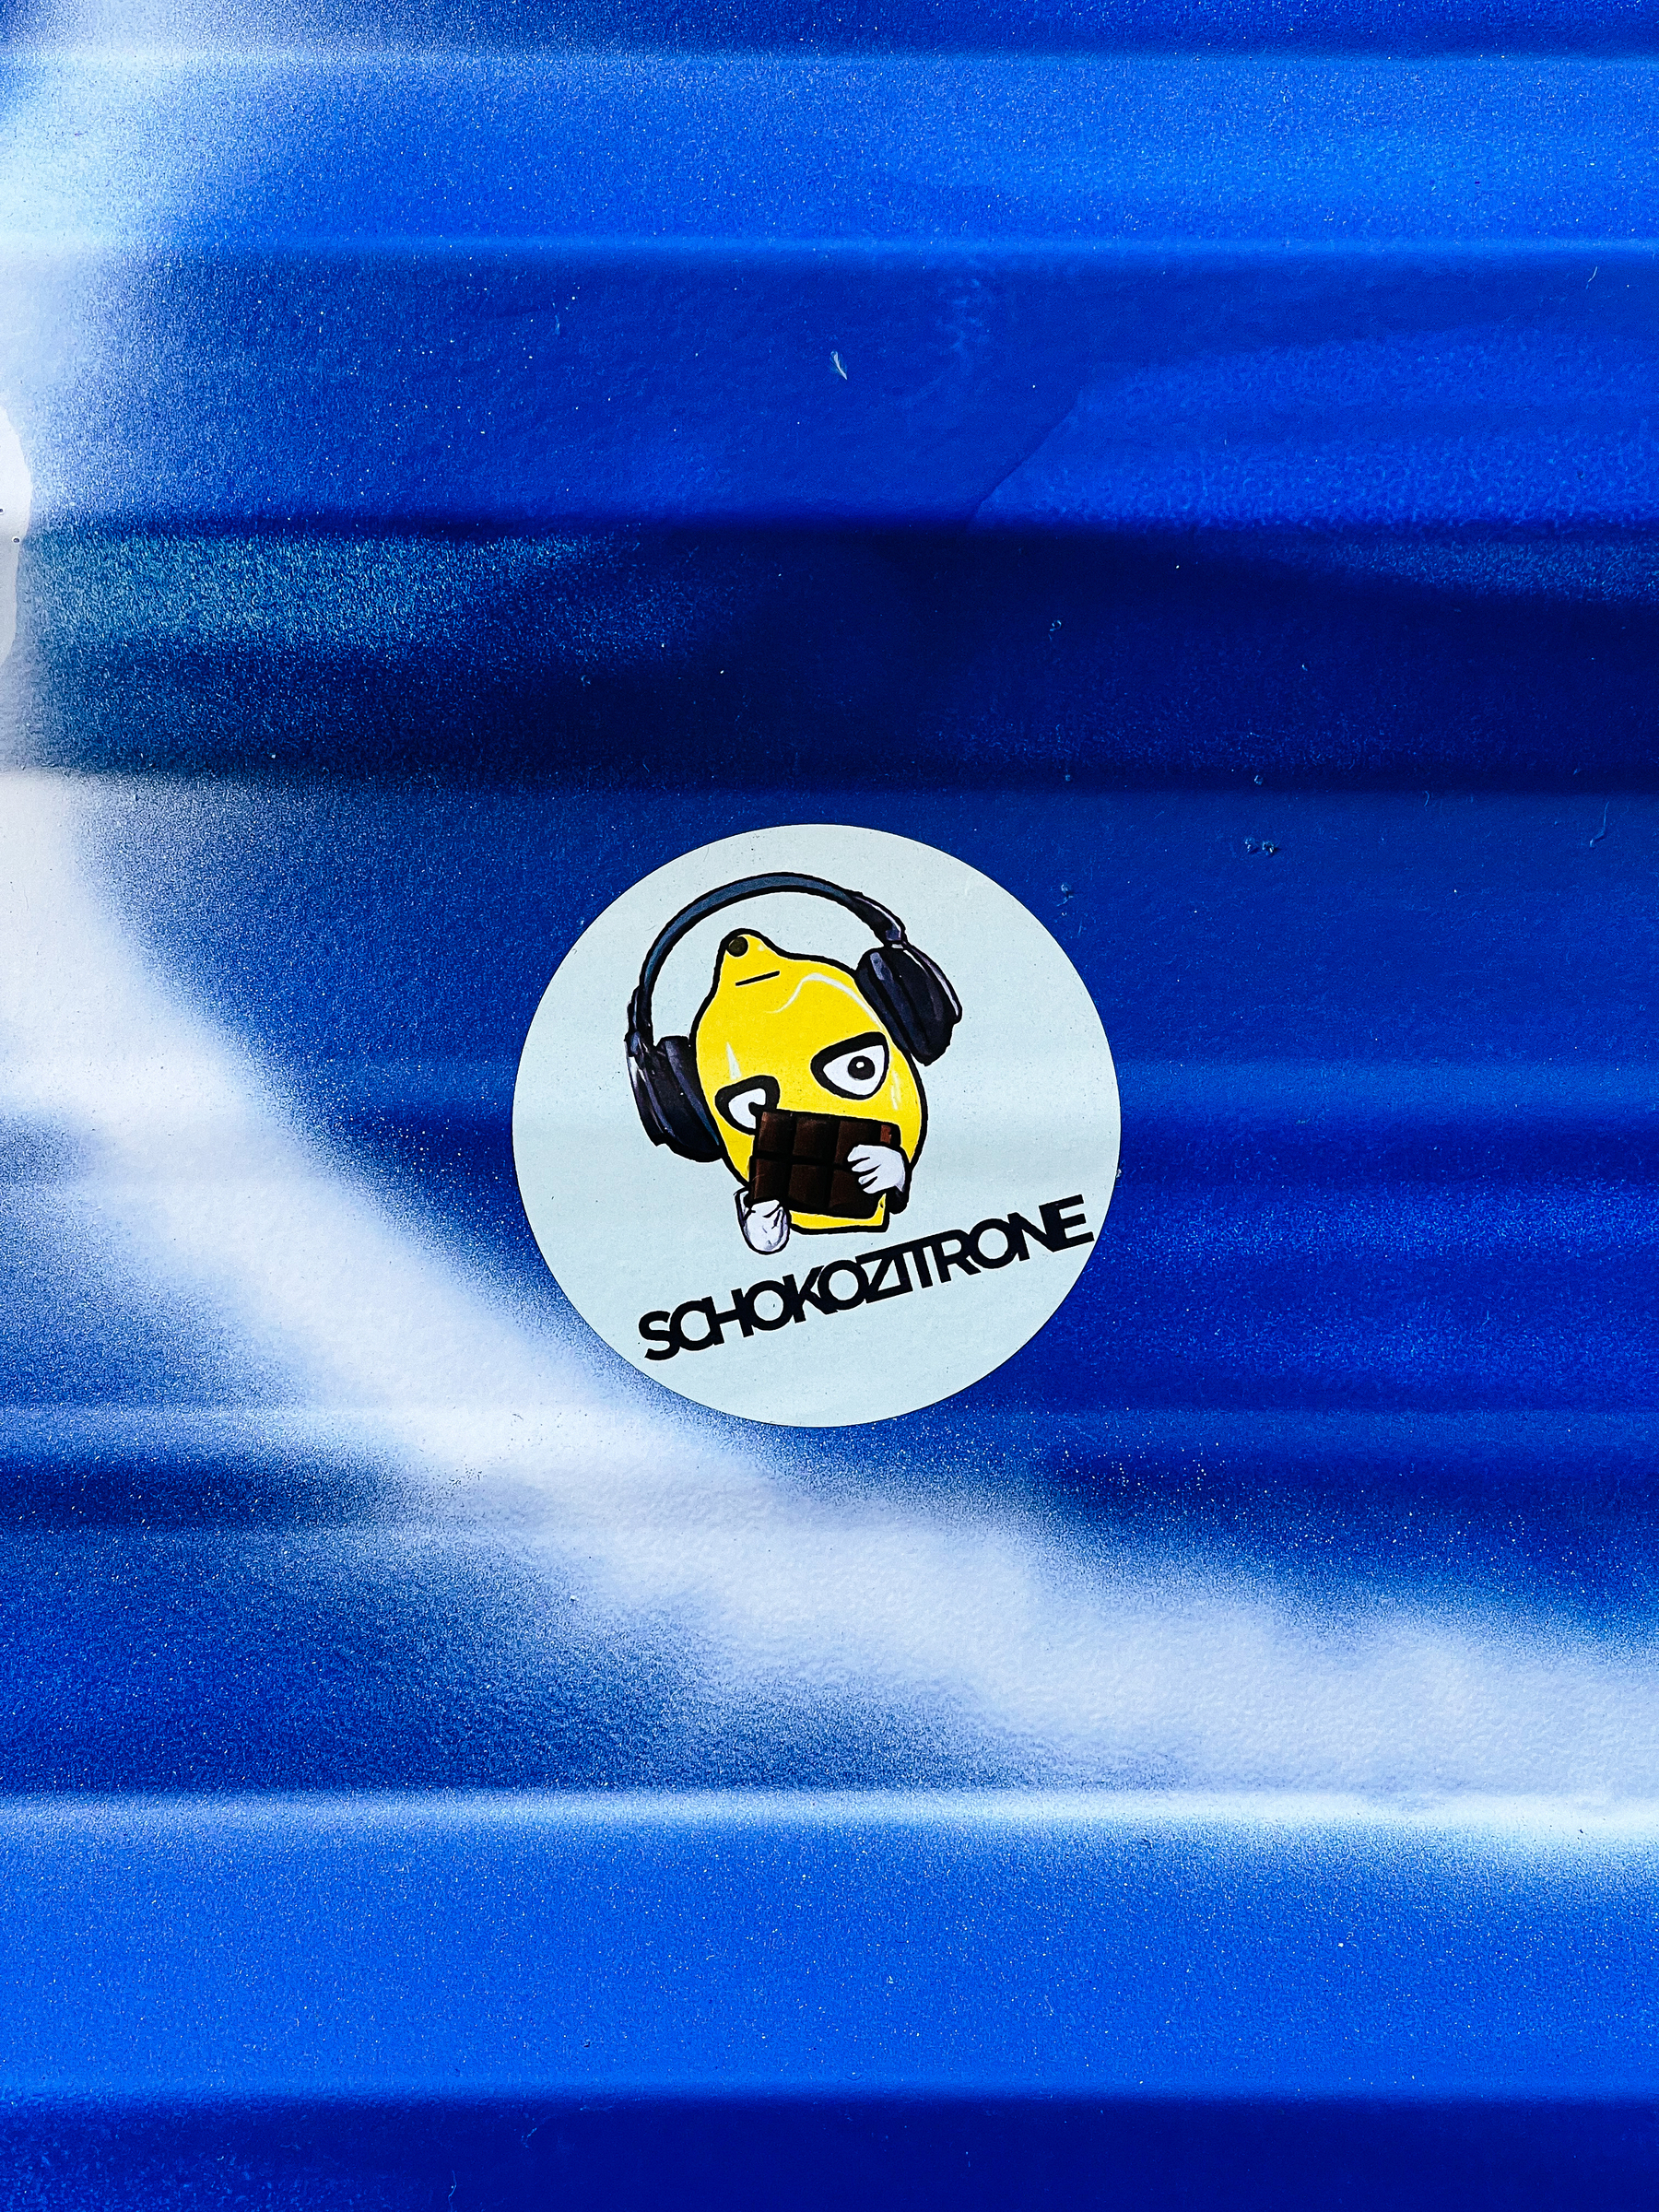 A lemon wearing headphones, holding a chocolate bar. &ldquo;SCHOKOZITRONE&rdquo;. It&rsquo;s a sticker. 